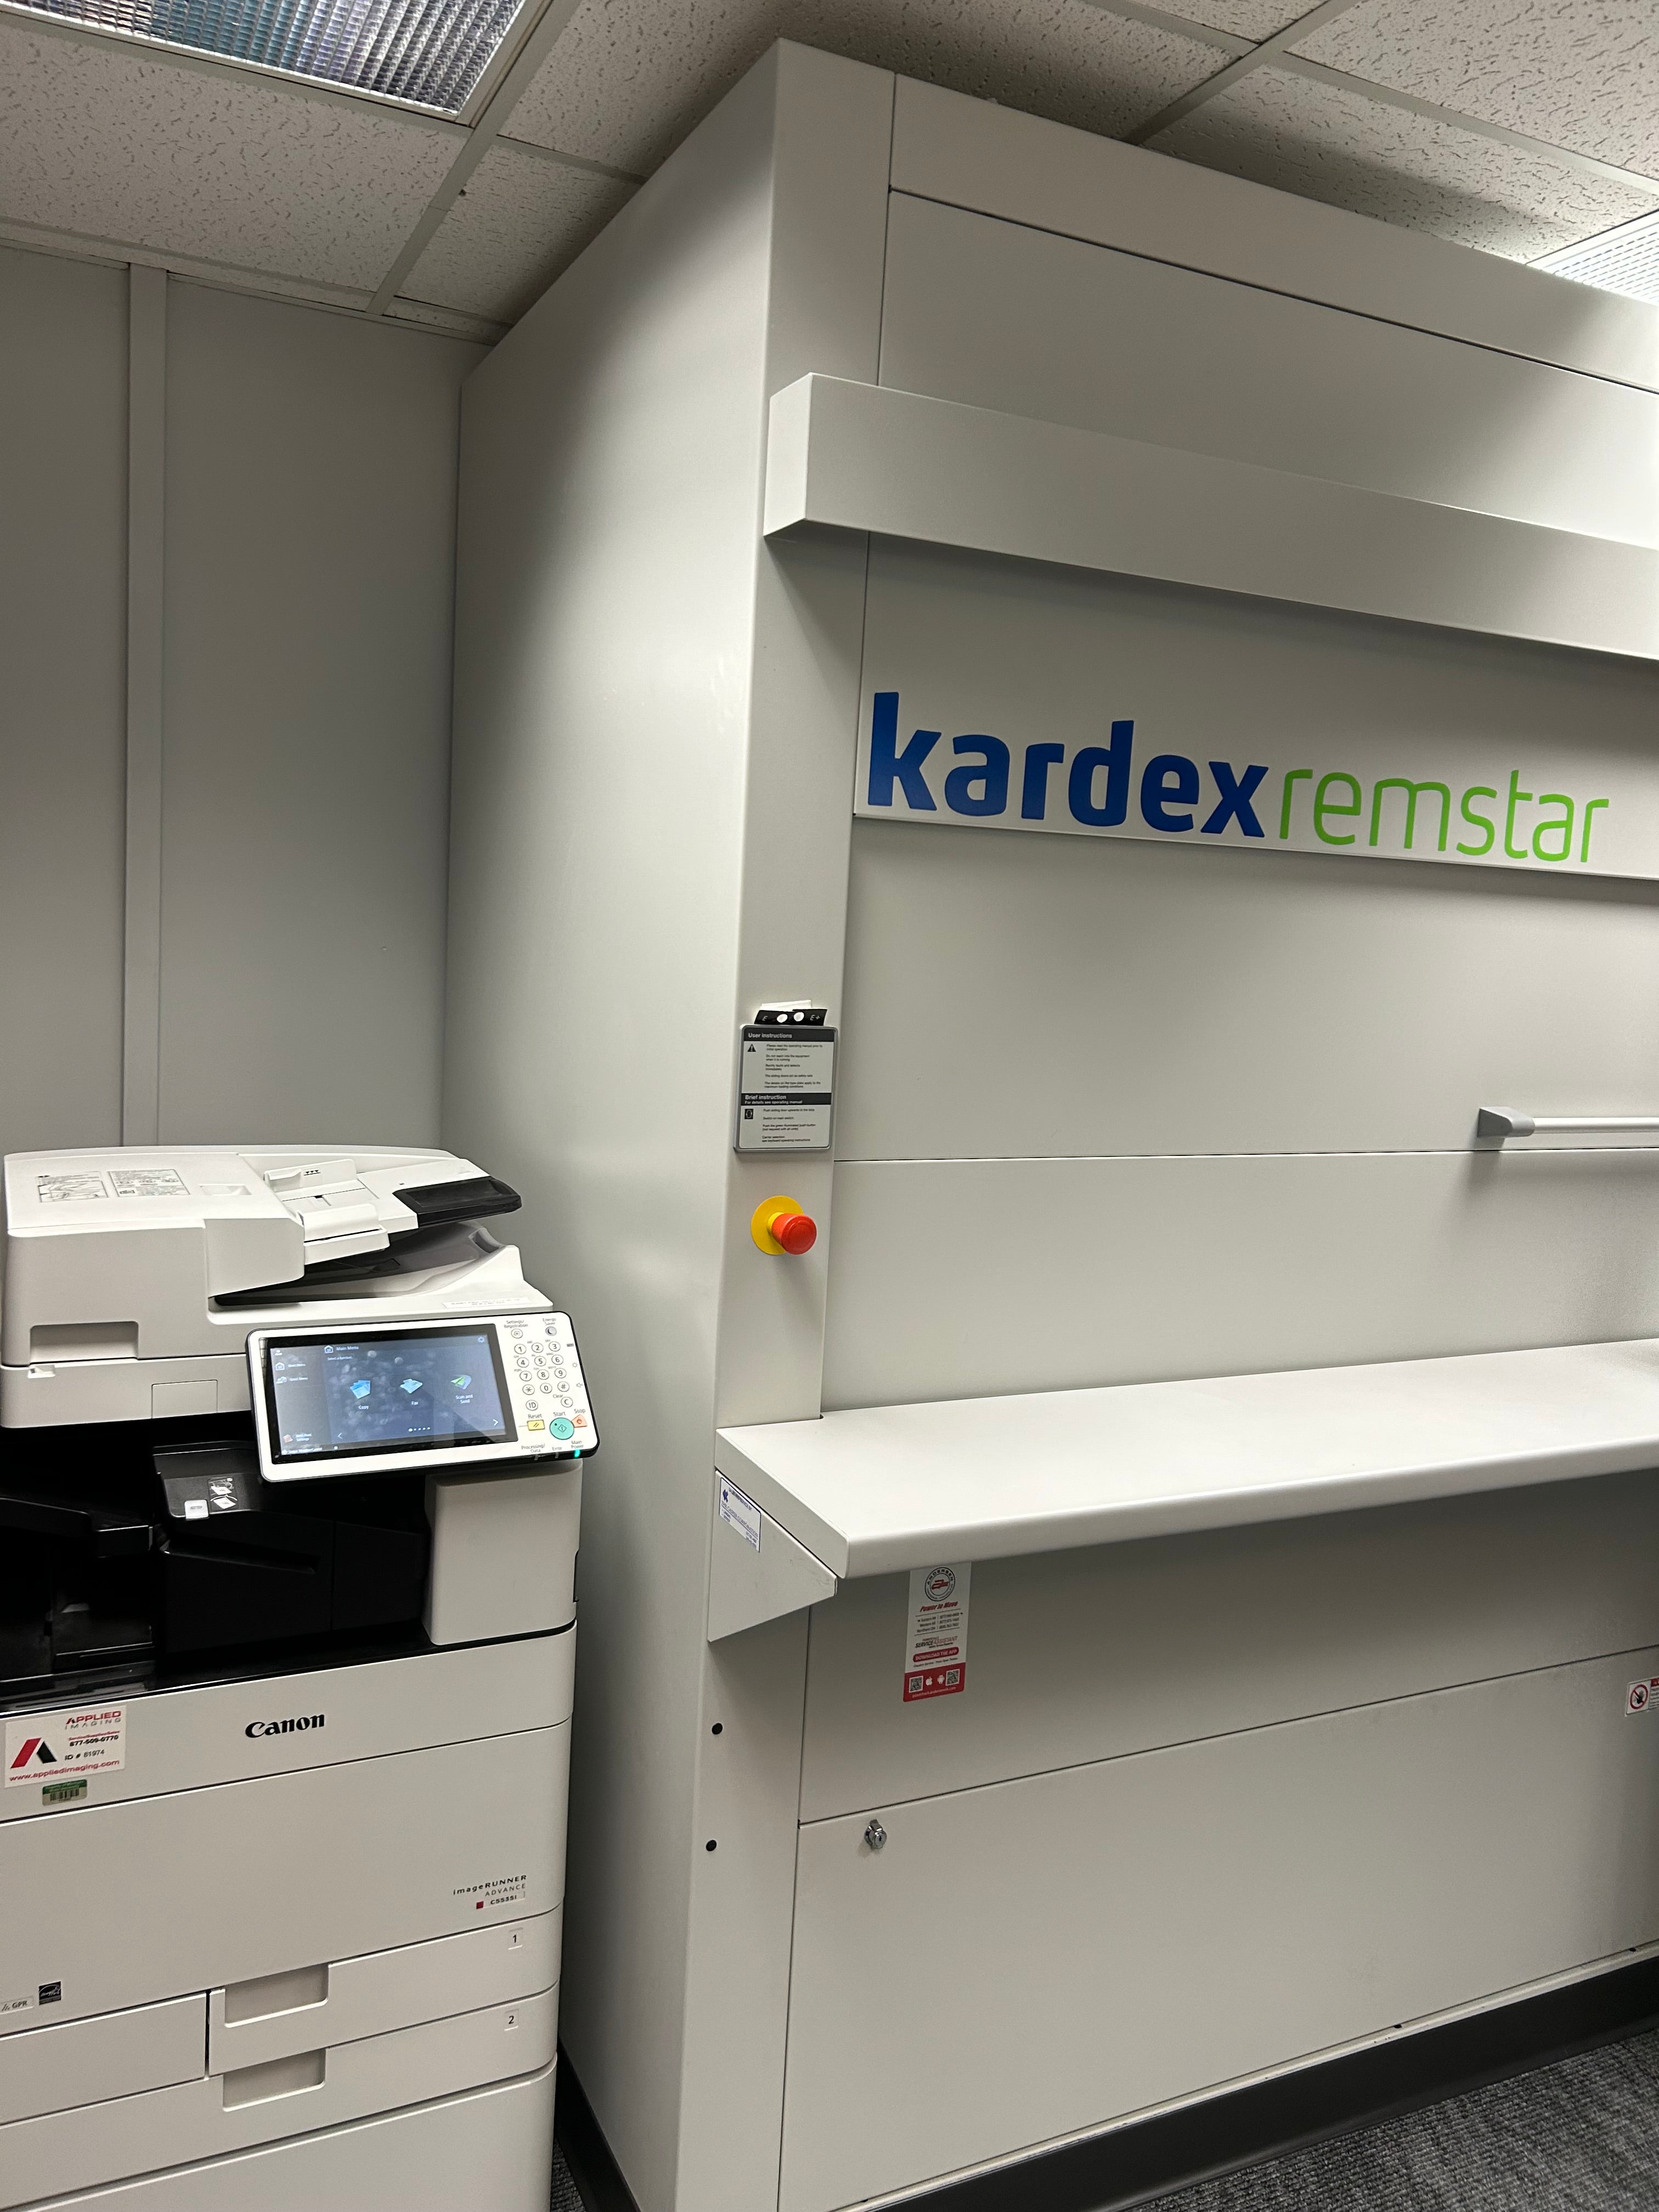 Kardex Remstar Lektriever Vertical Carousel Rotating File System